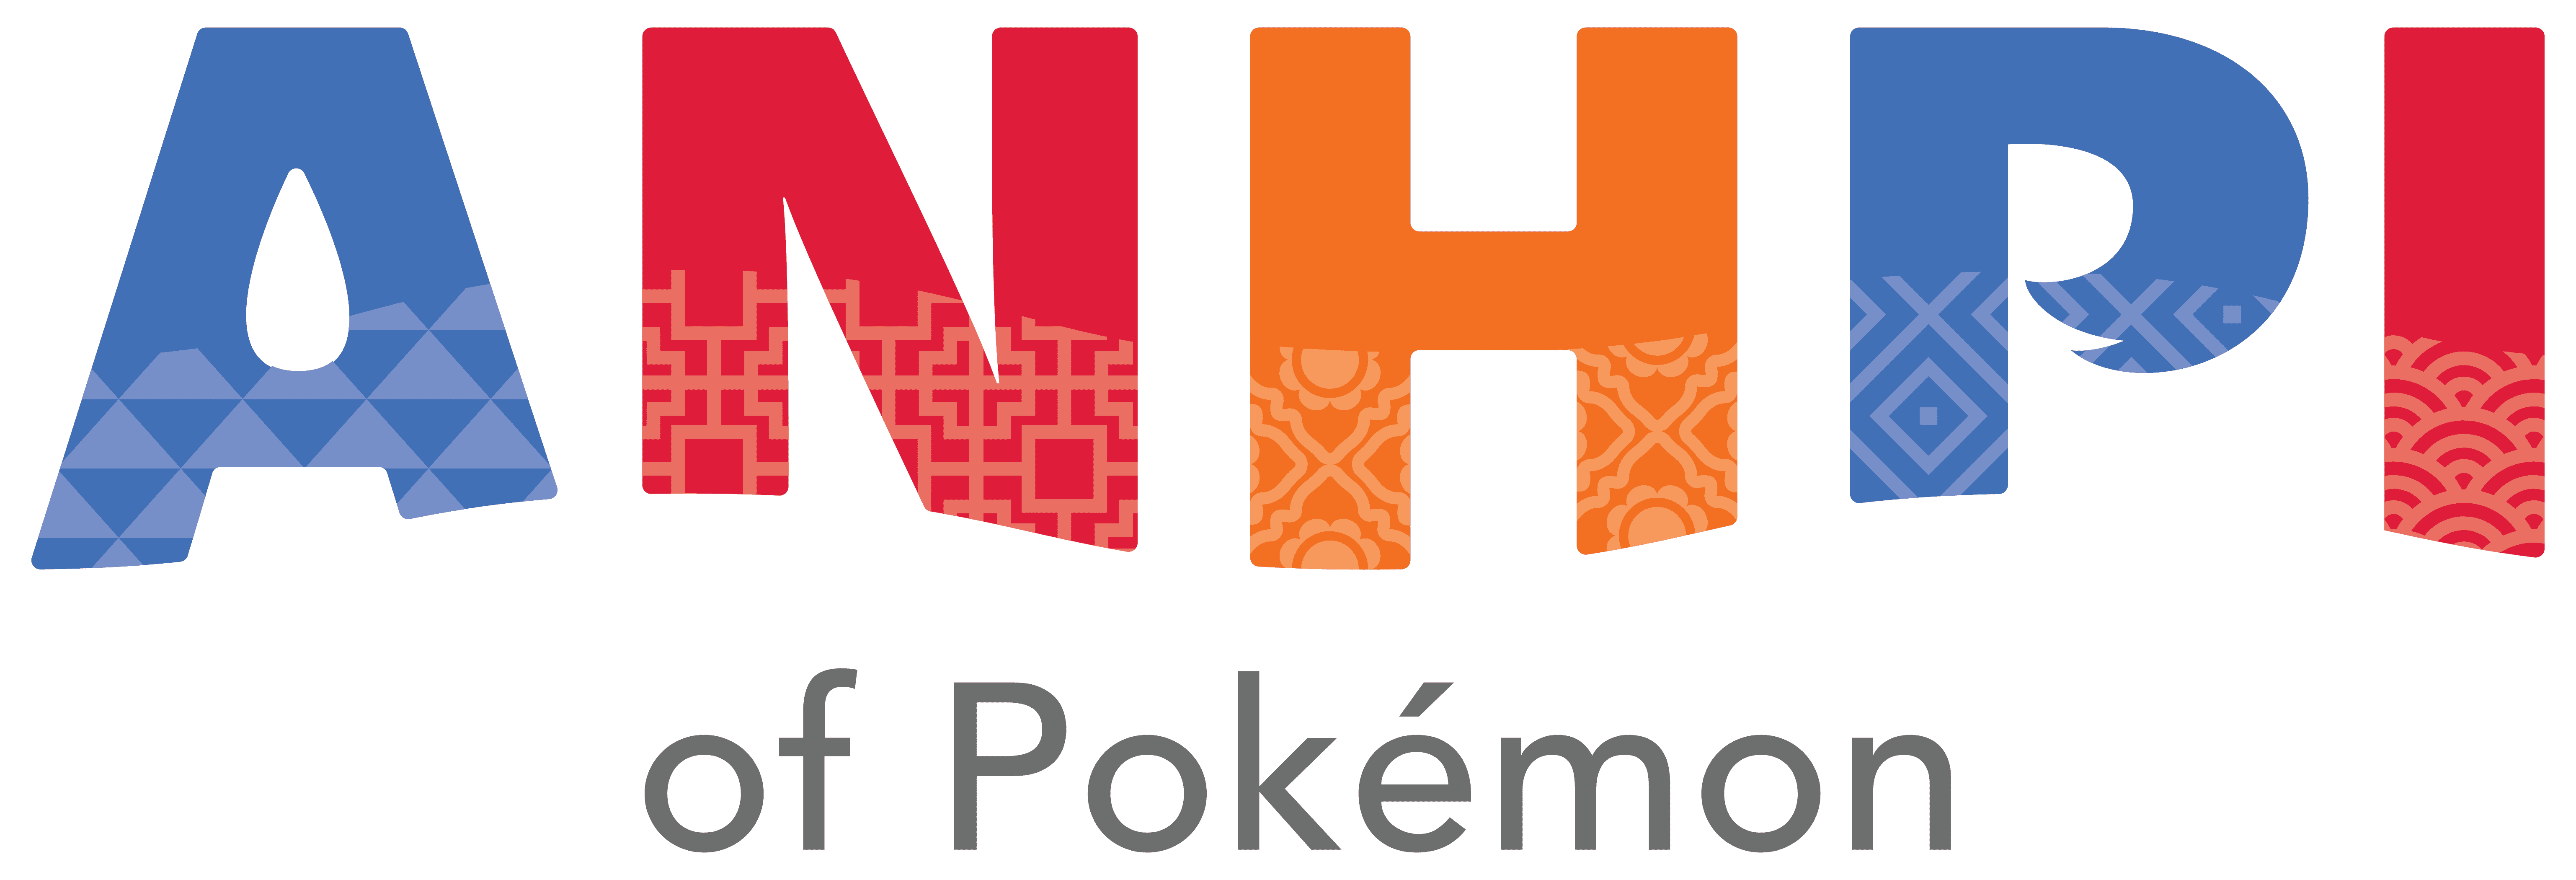 The ANHPI of Pokémon Employee Resource Group